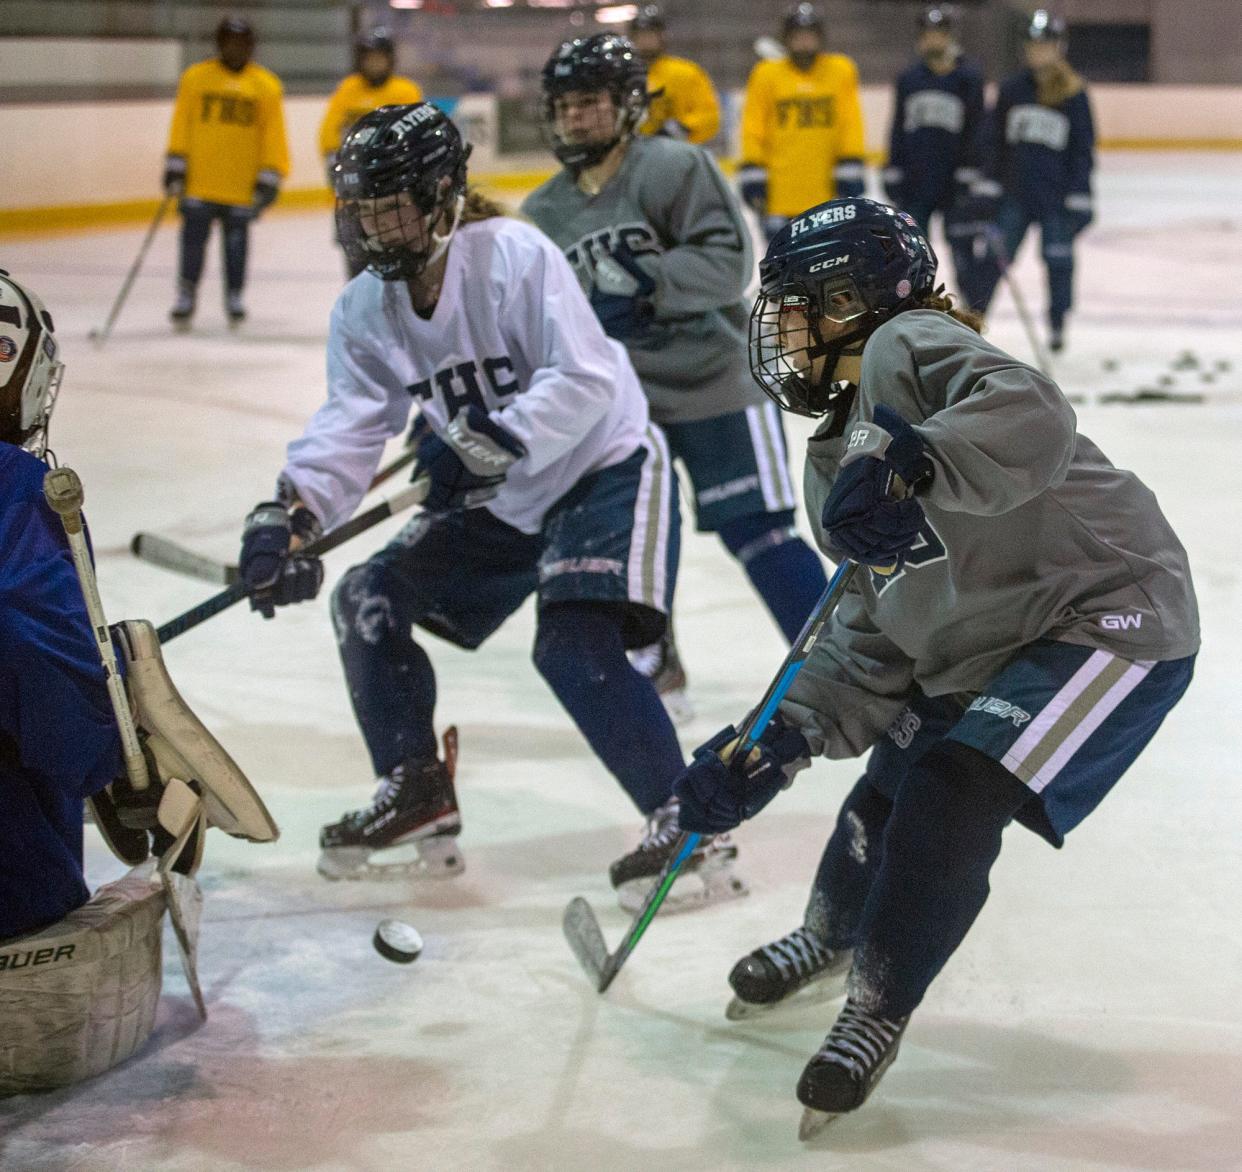 Framingham High School Girls Hockey junior Mackenzie "Mac" Coleman takes a shot at practice at Loring Arena, Jan. 20, 2023.